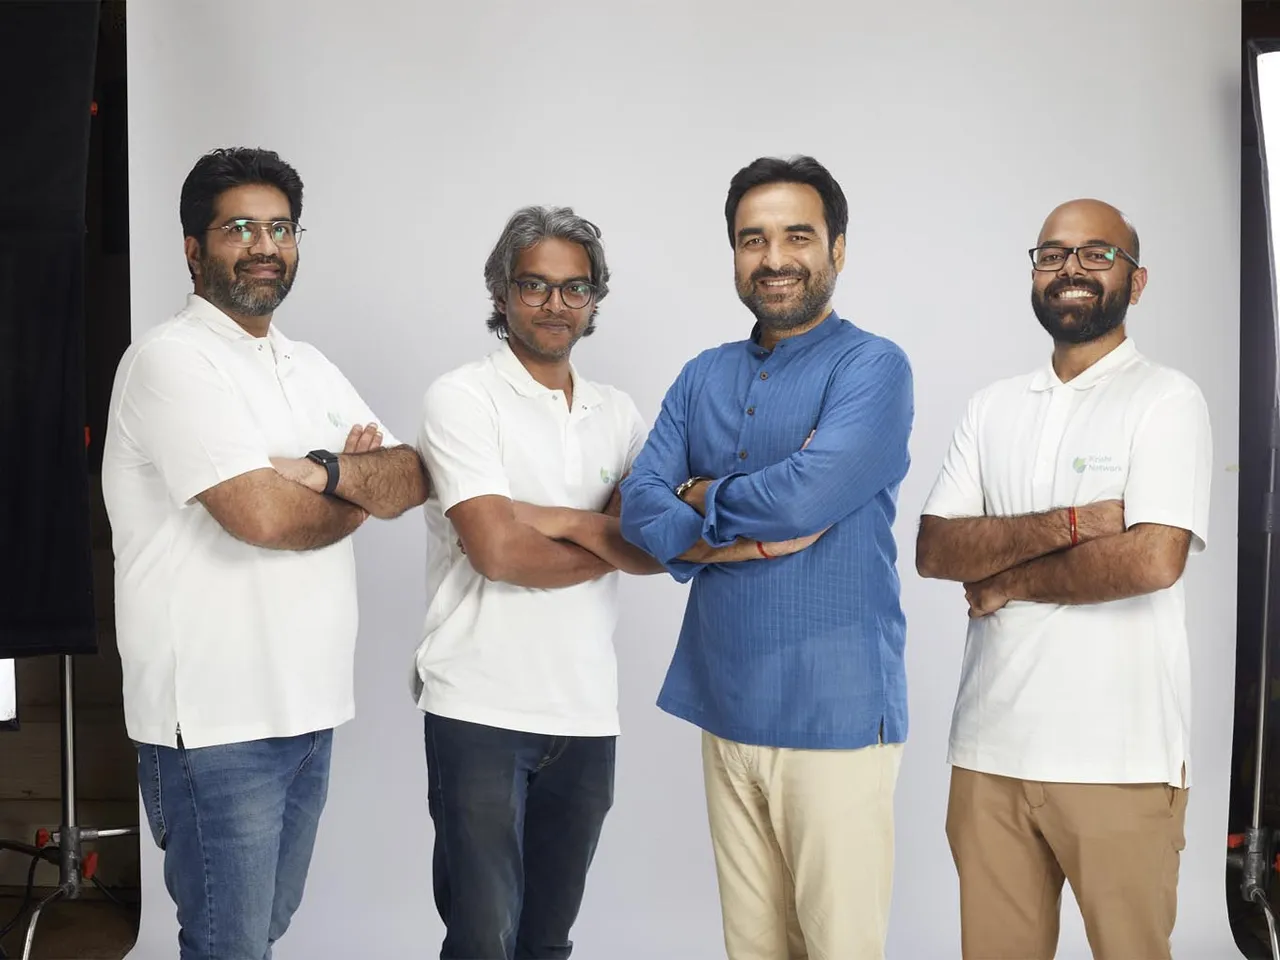 Agritech startup Krishi Network onboards Pankaj Tripathi as investor and brand ambassador